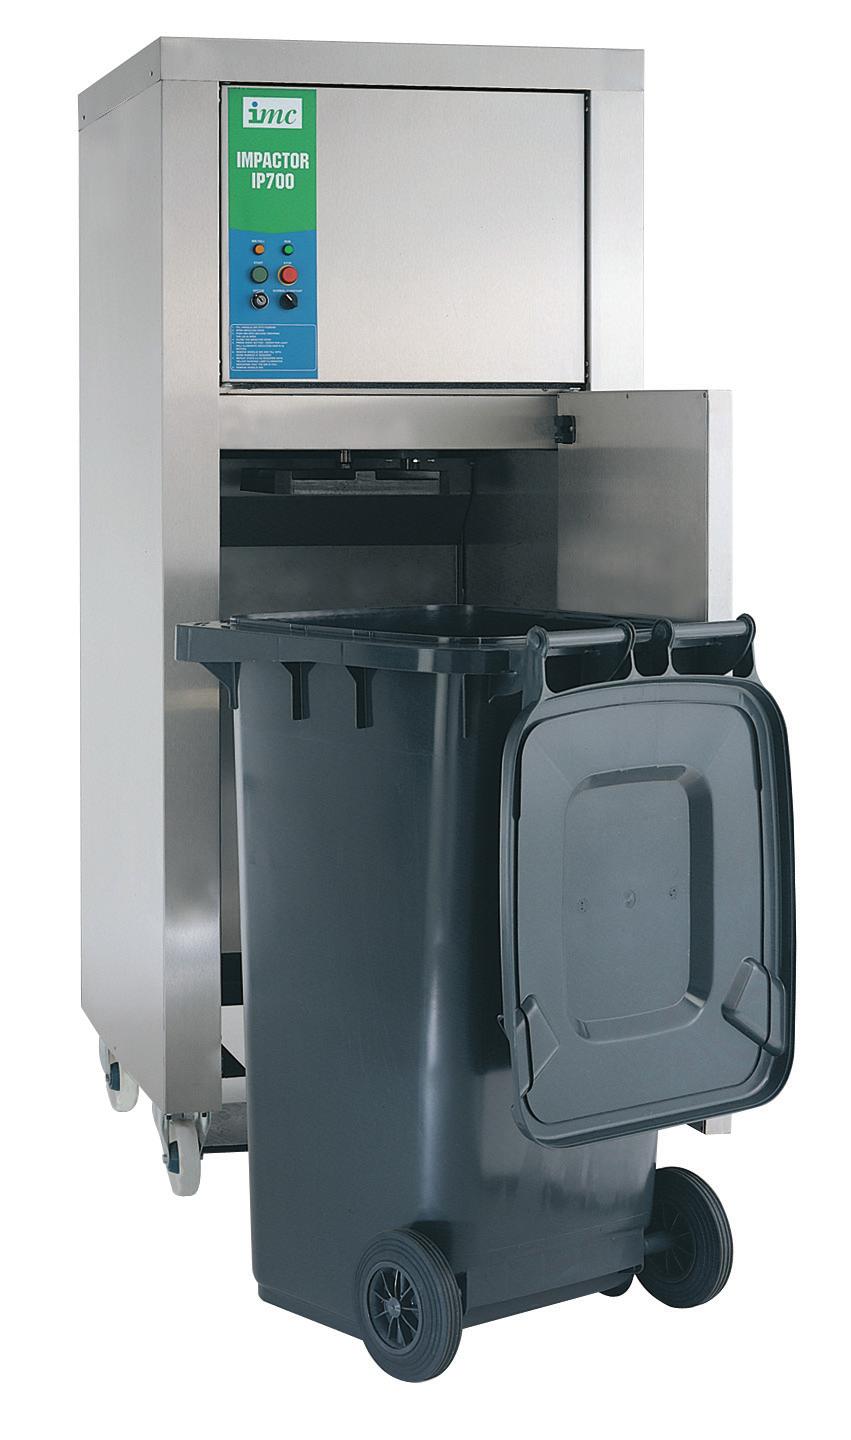 I vårt breda sortiment finner du även komprimeringsmaskiner, Waste Pro matavfalls-avvattnare